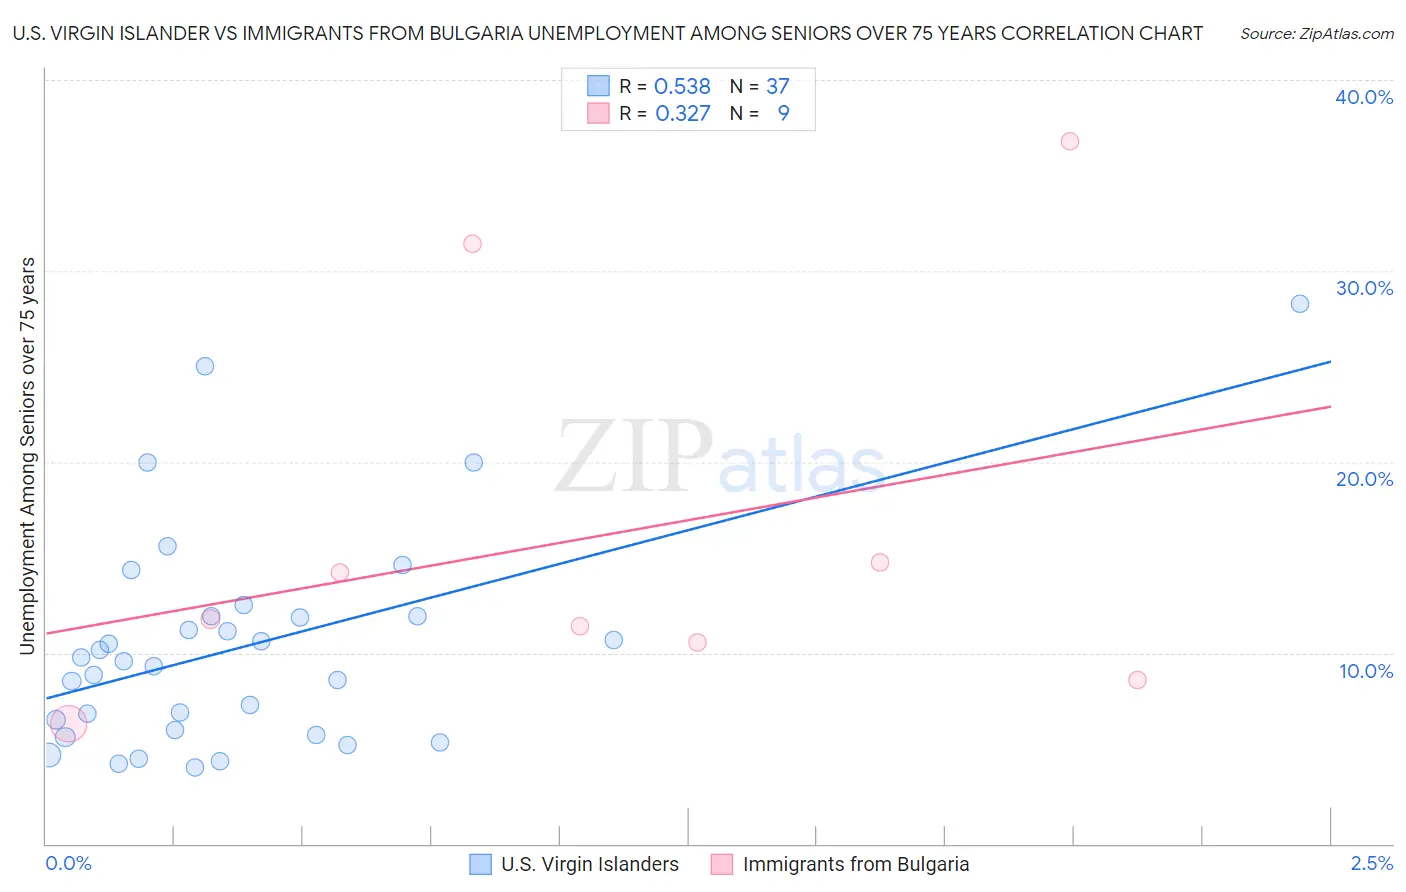 U.S. Virgin Islander vs Immigrants from Bulgaria Unemployment Among Seniors over 75 years